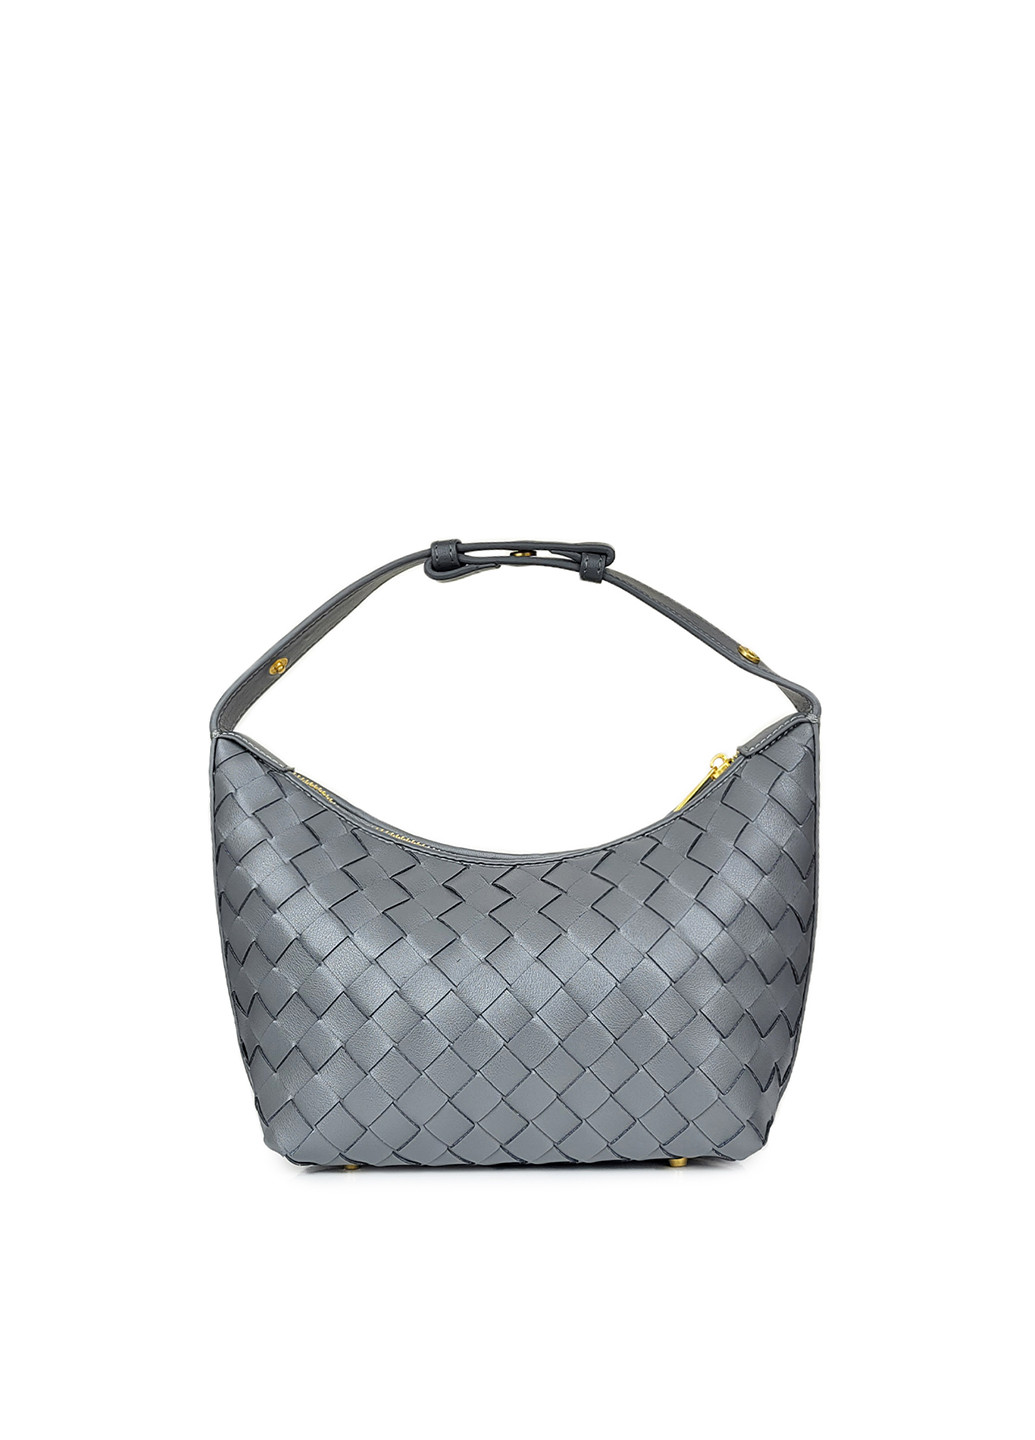 Шкіряна сумка хобо сіра плетена, 9752 сір, Fashion (267404187)